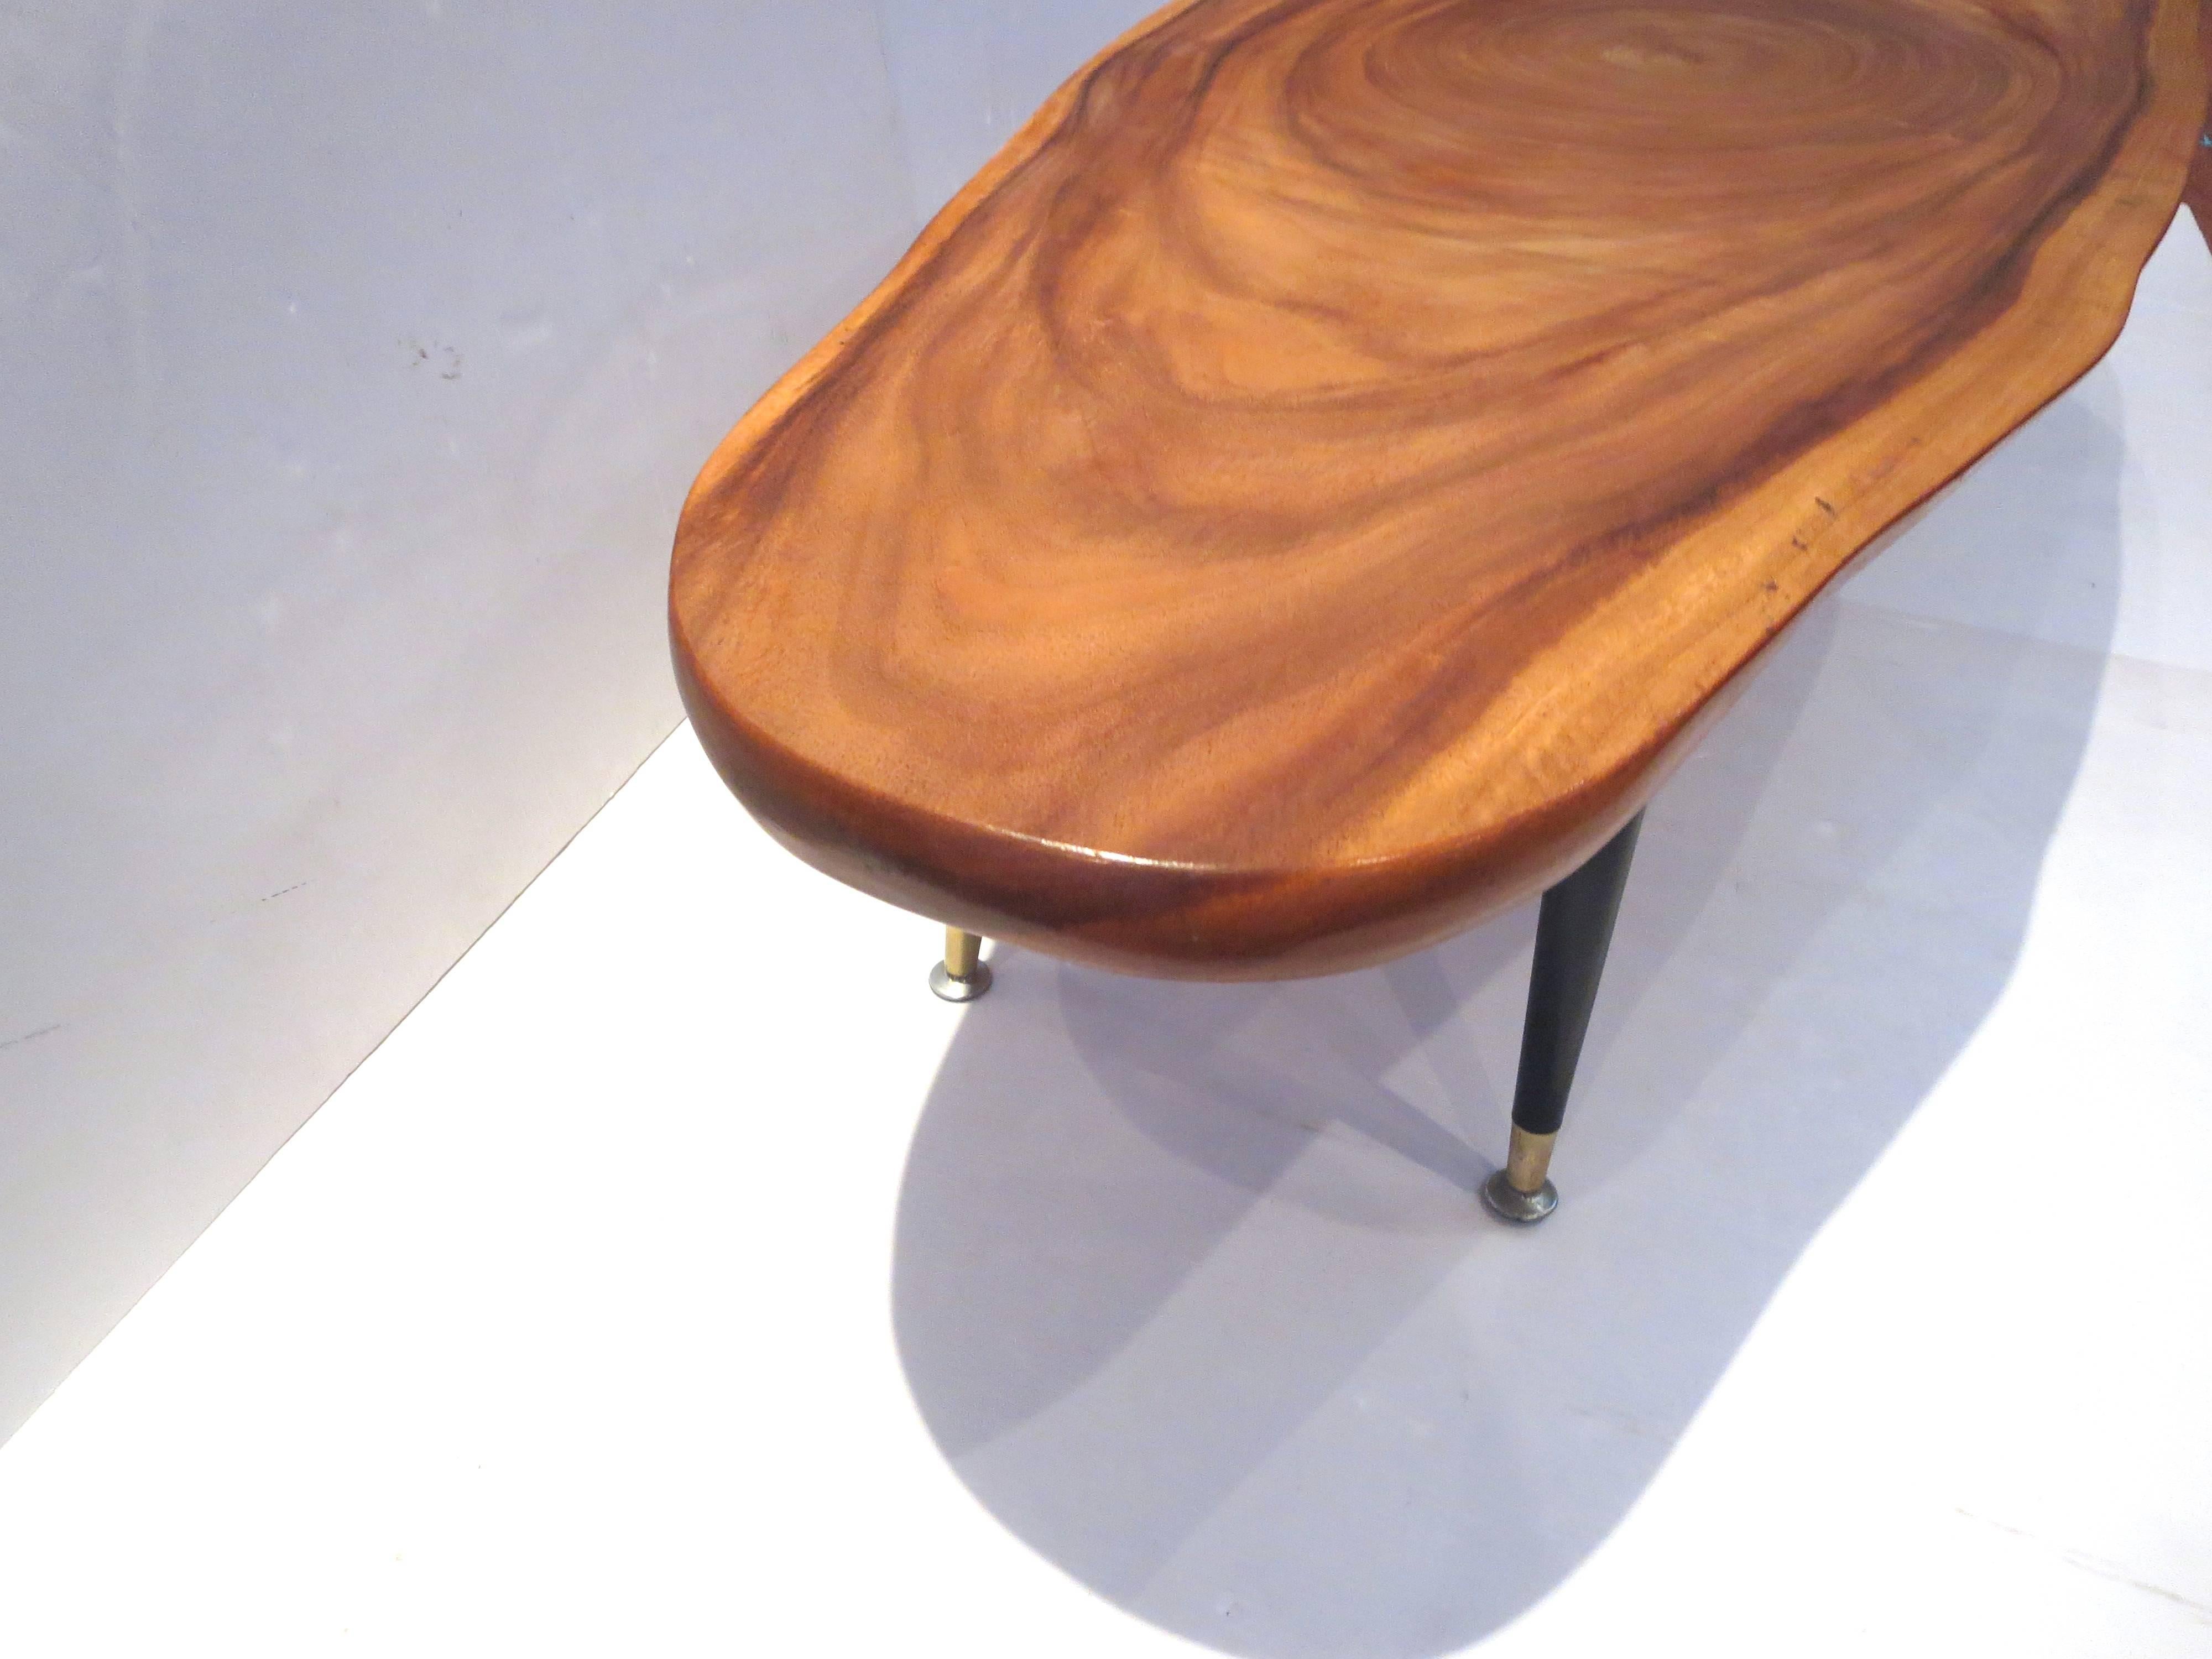 American Massive Free-Form Organic Coffee Table Koa Wood Top and Tapered Legs